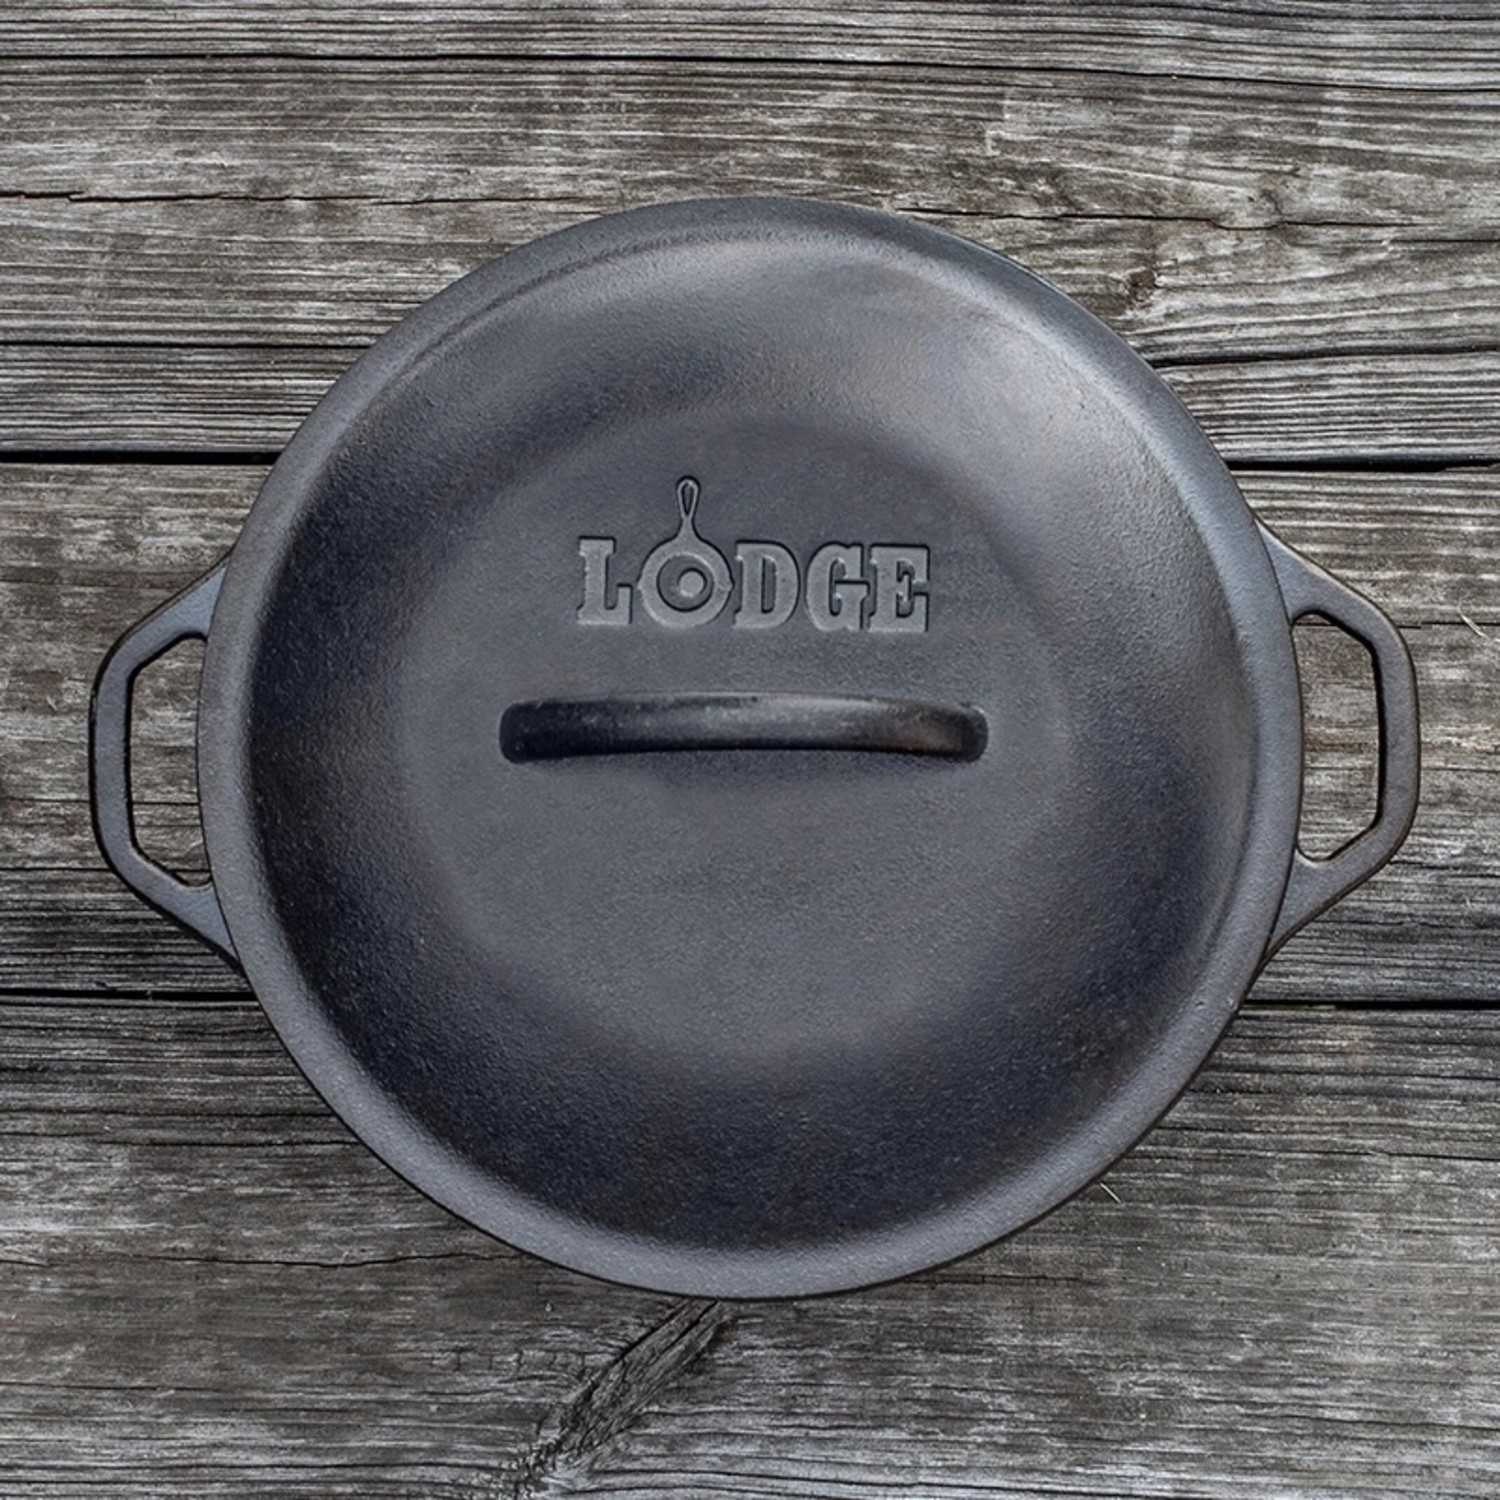 Lodge 5 quart Round Pre-Seasoned Cast Iron Dutch Oven - Whisk